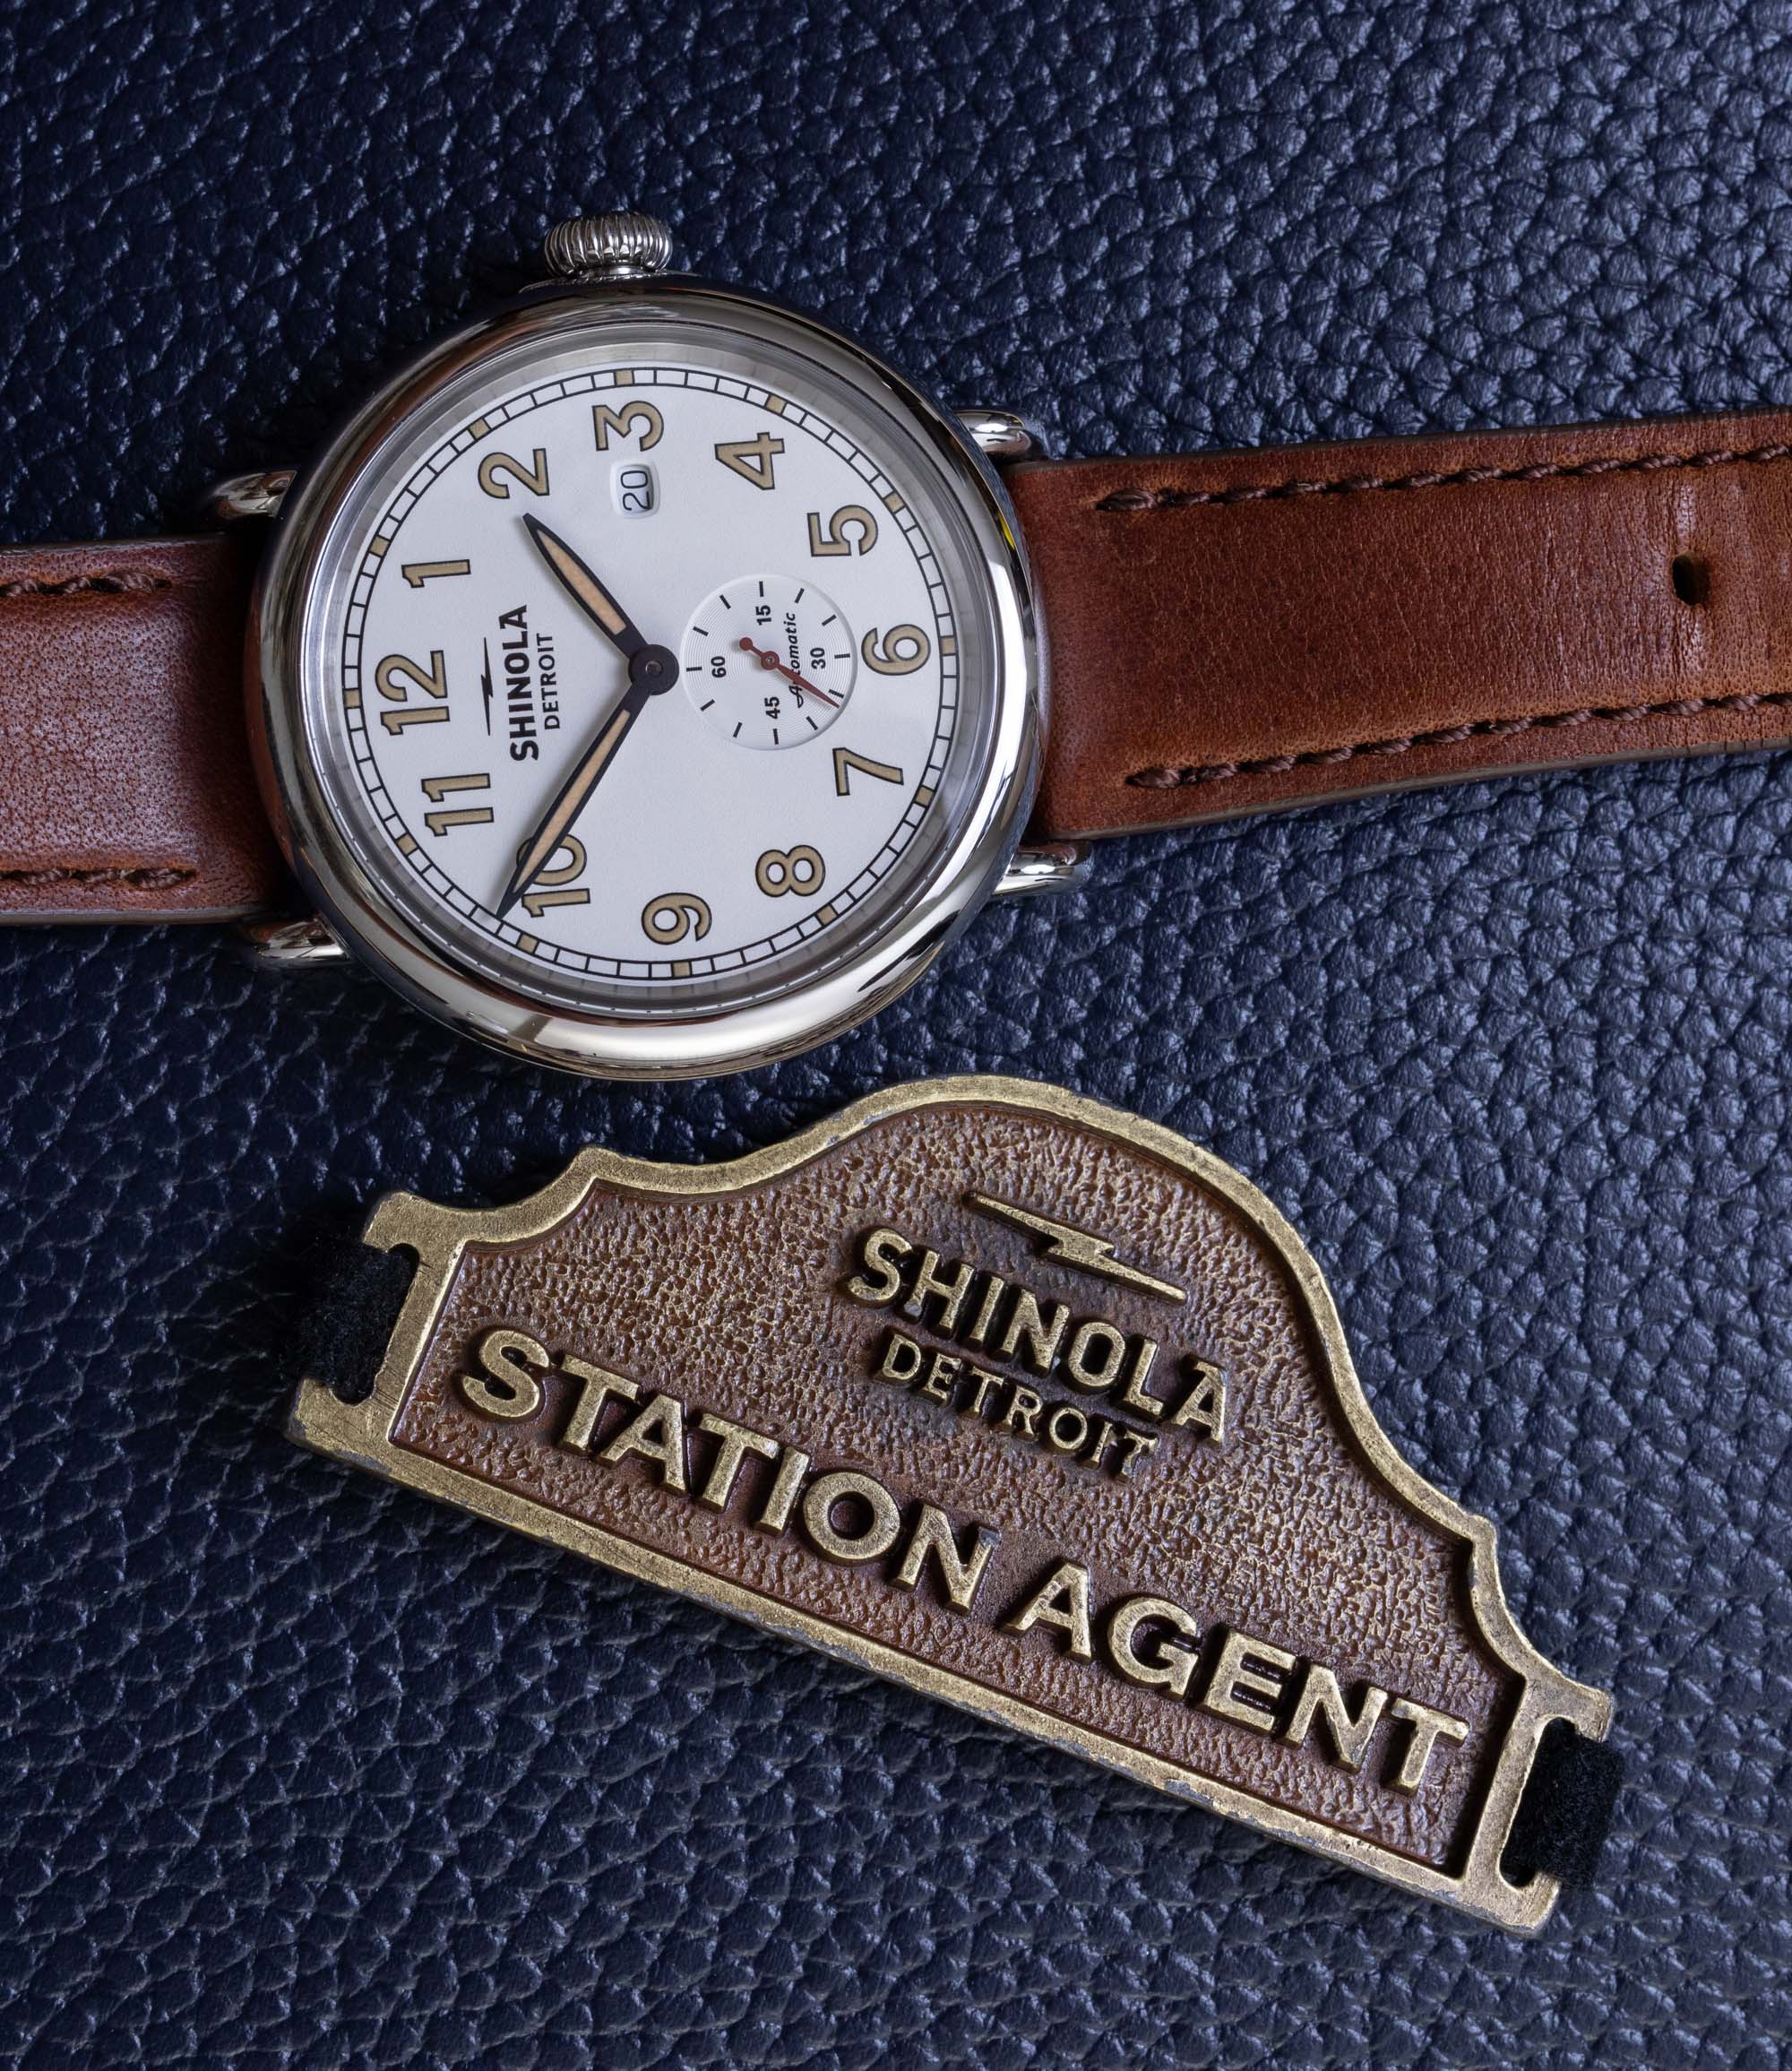 Обзор часов: Shinola Runwell Station Agent с автоматическим механизмом